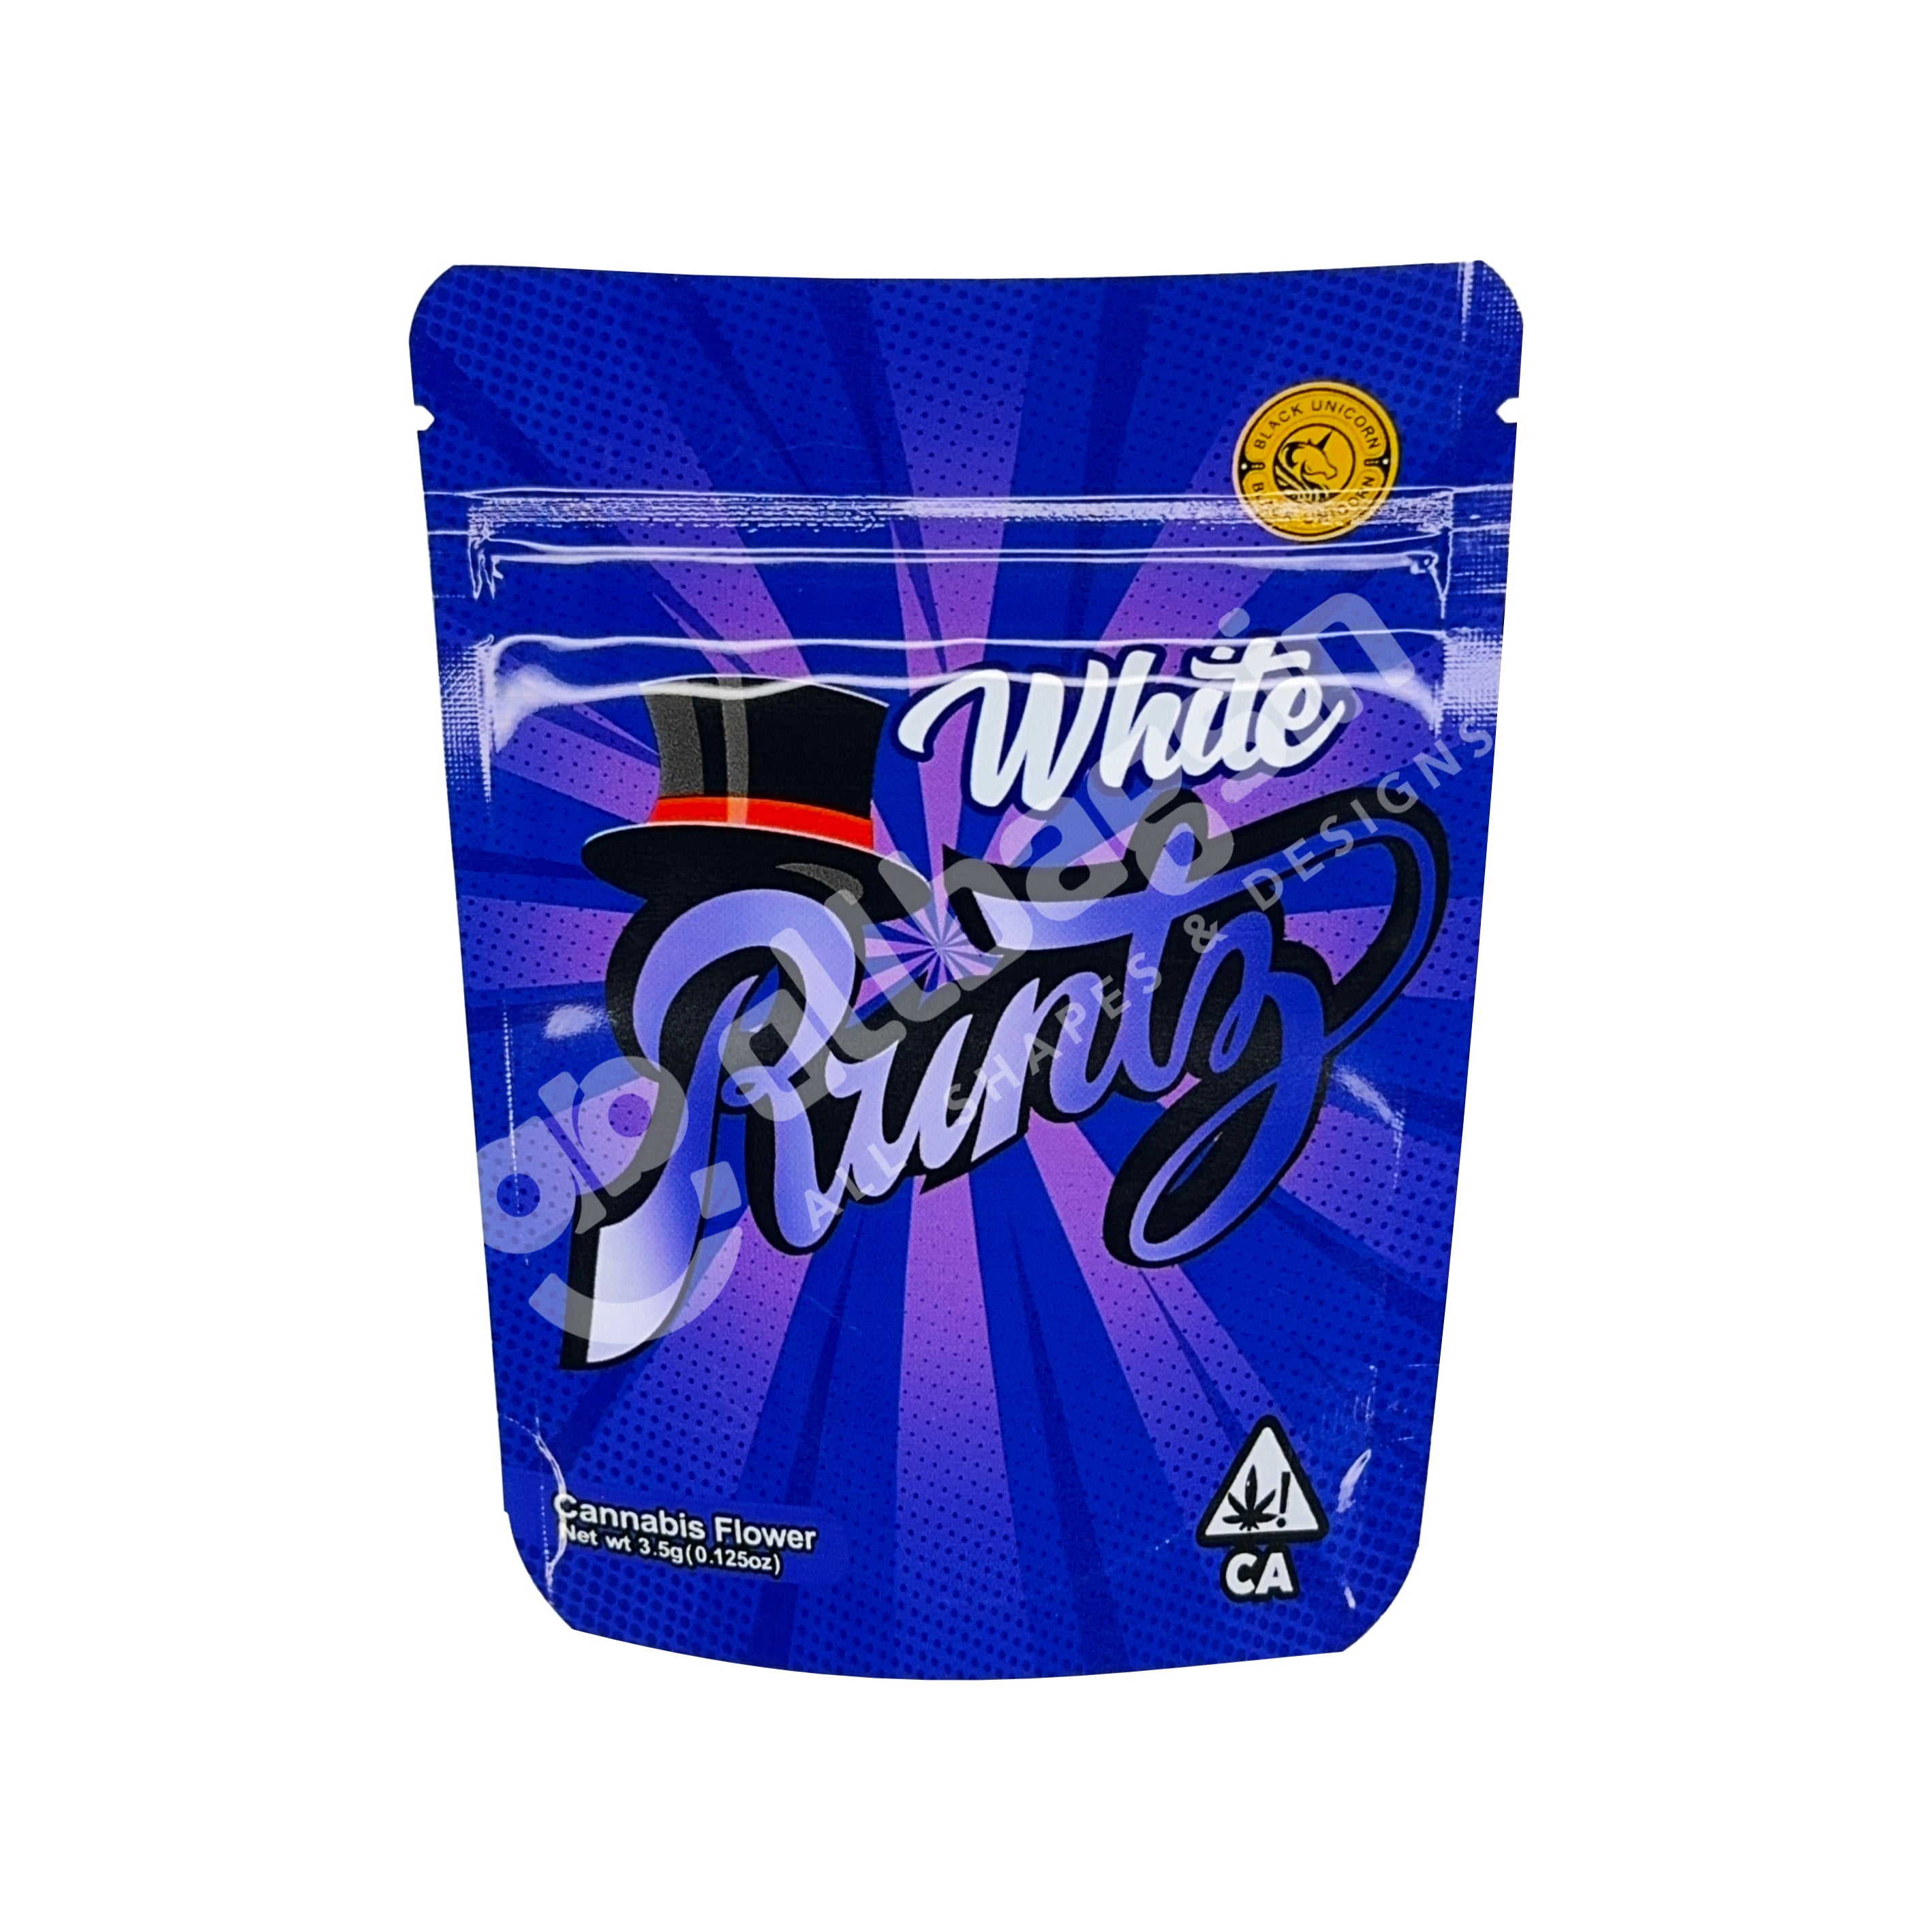 White Runtz Black Unicorn 3.5g Mylar Bag